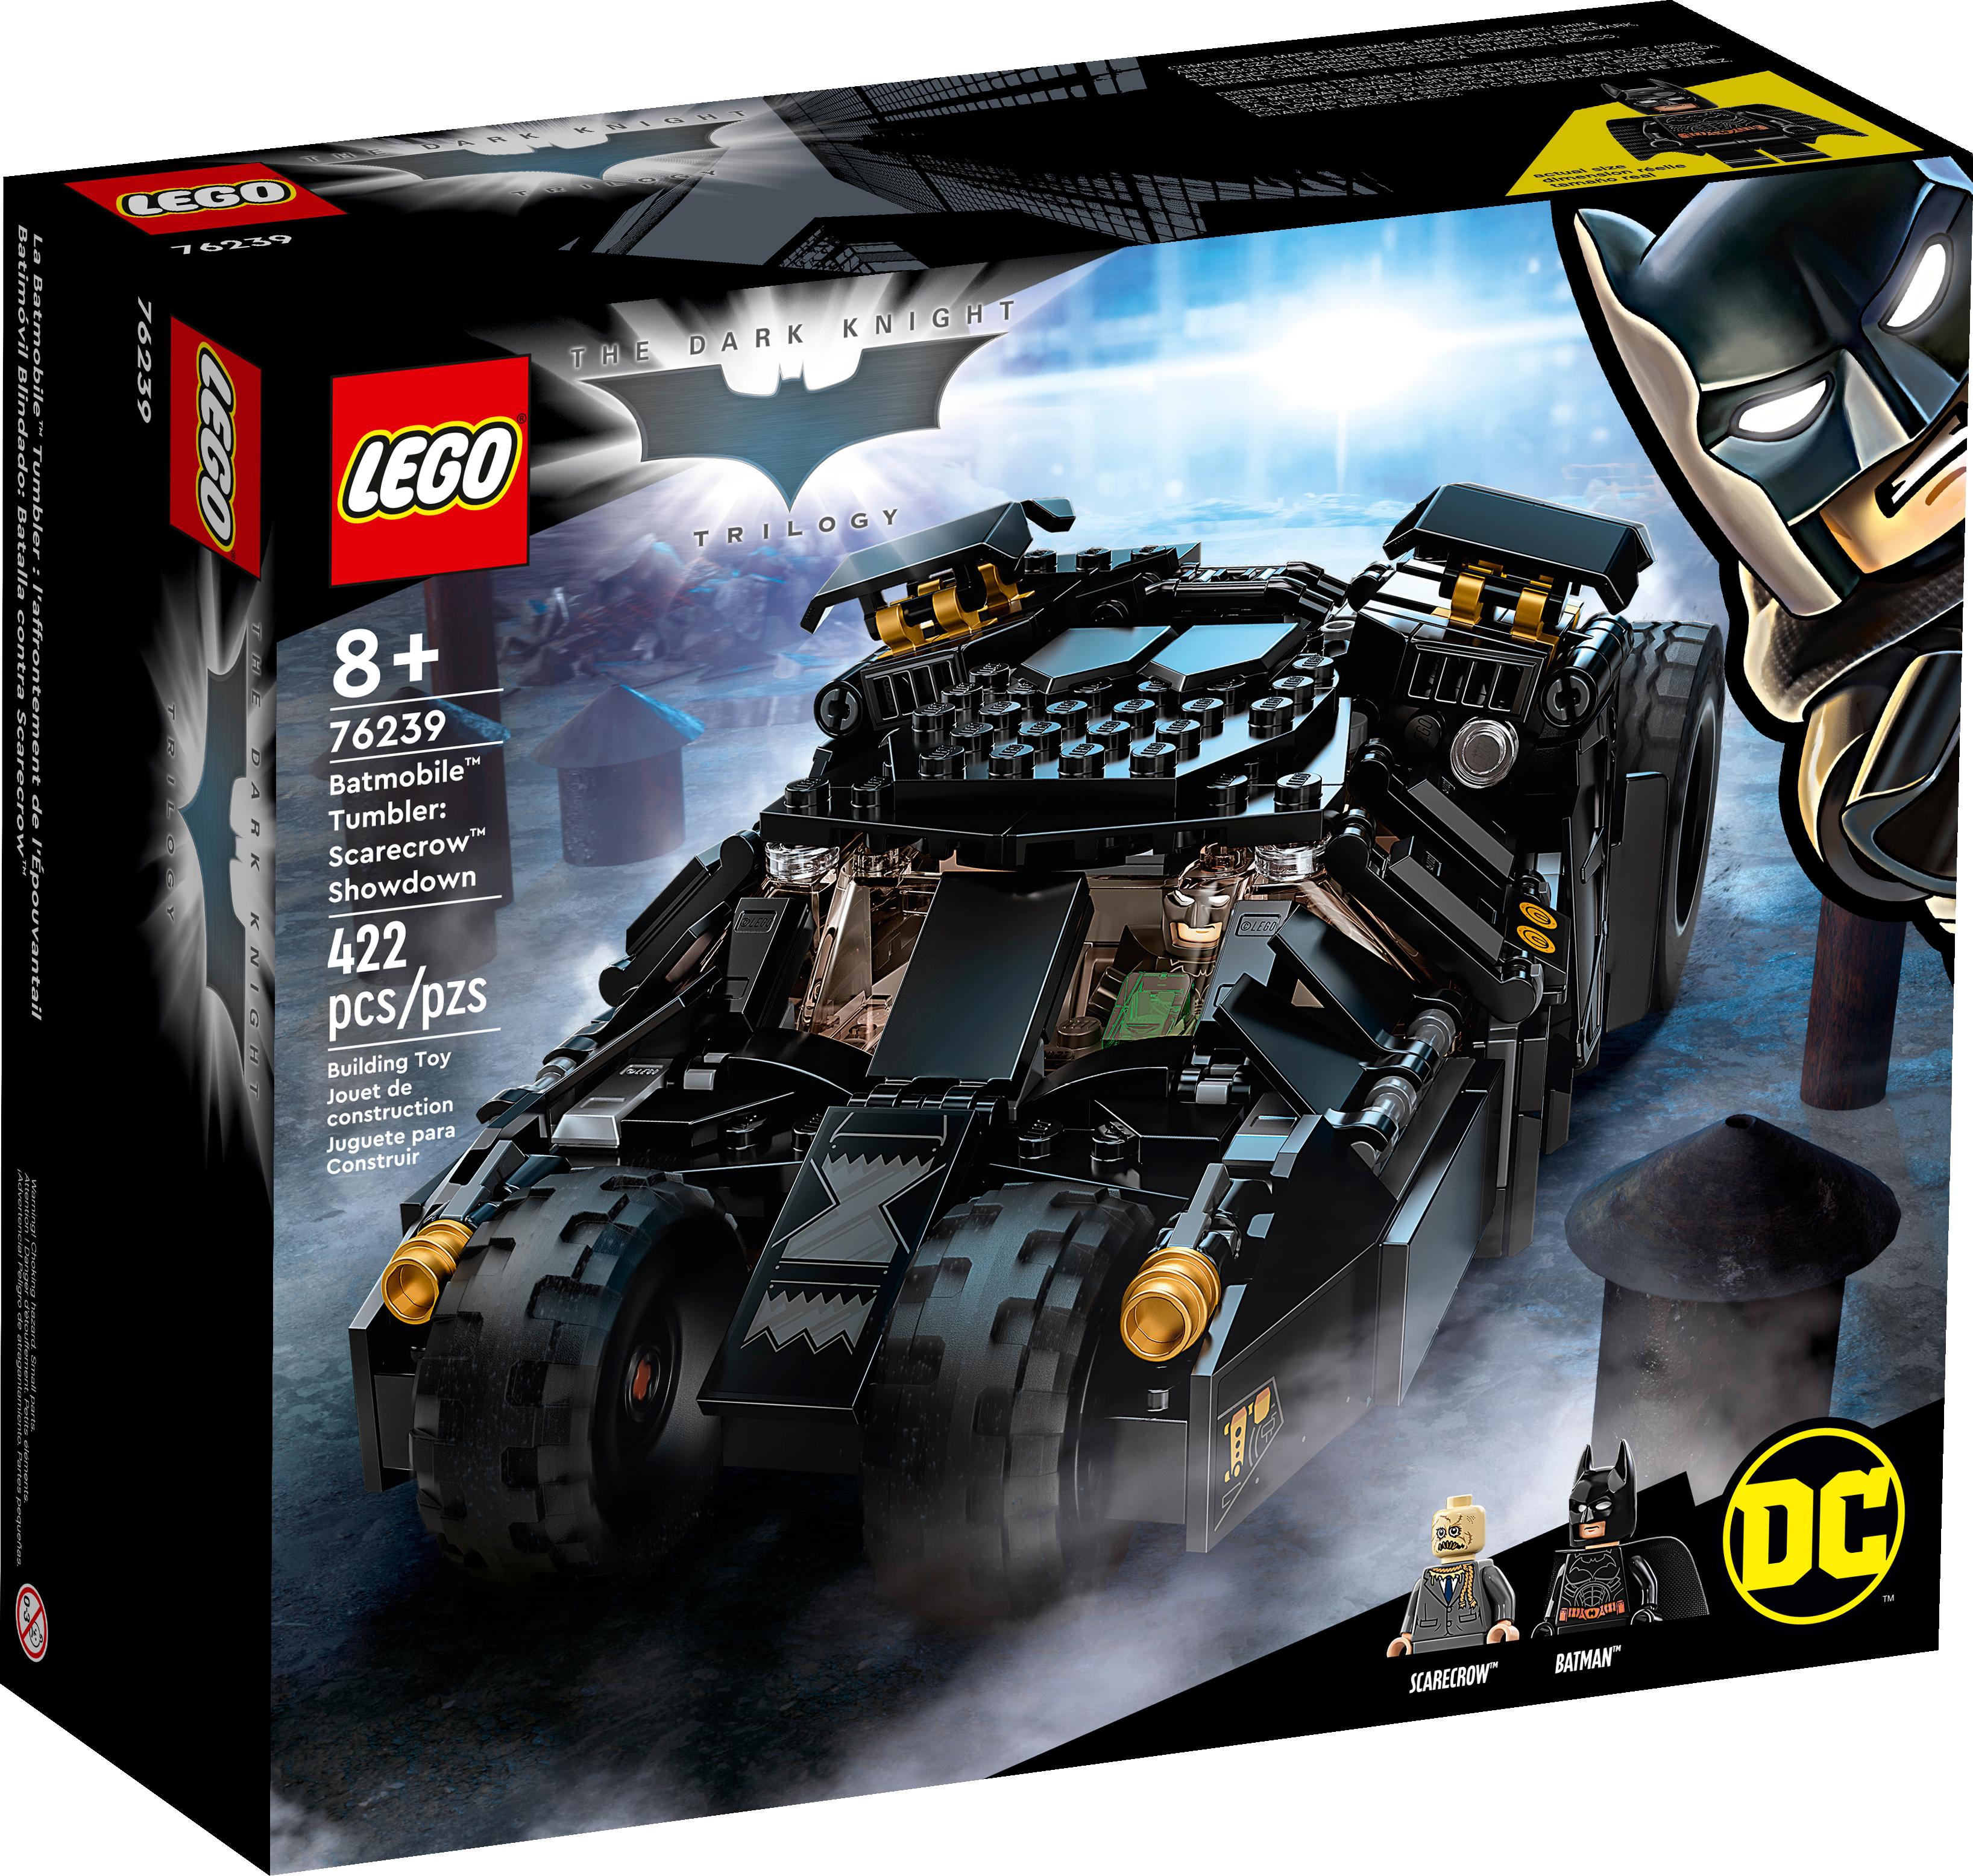 Batman™ Baufigur 76259 | Batman™ | Offizieller LEGO® Shop DE